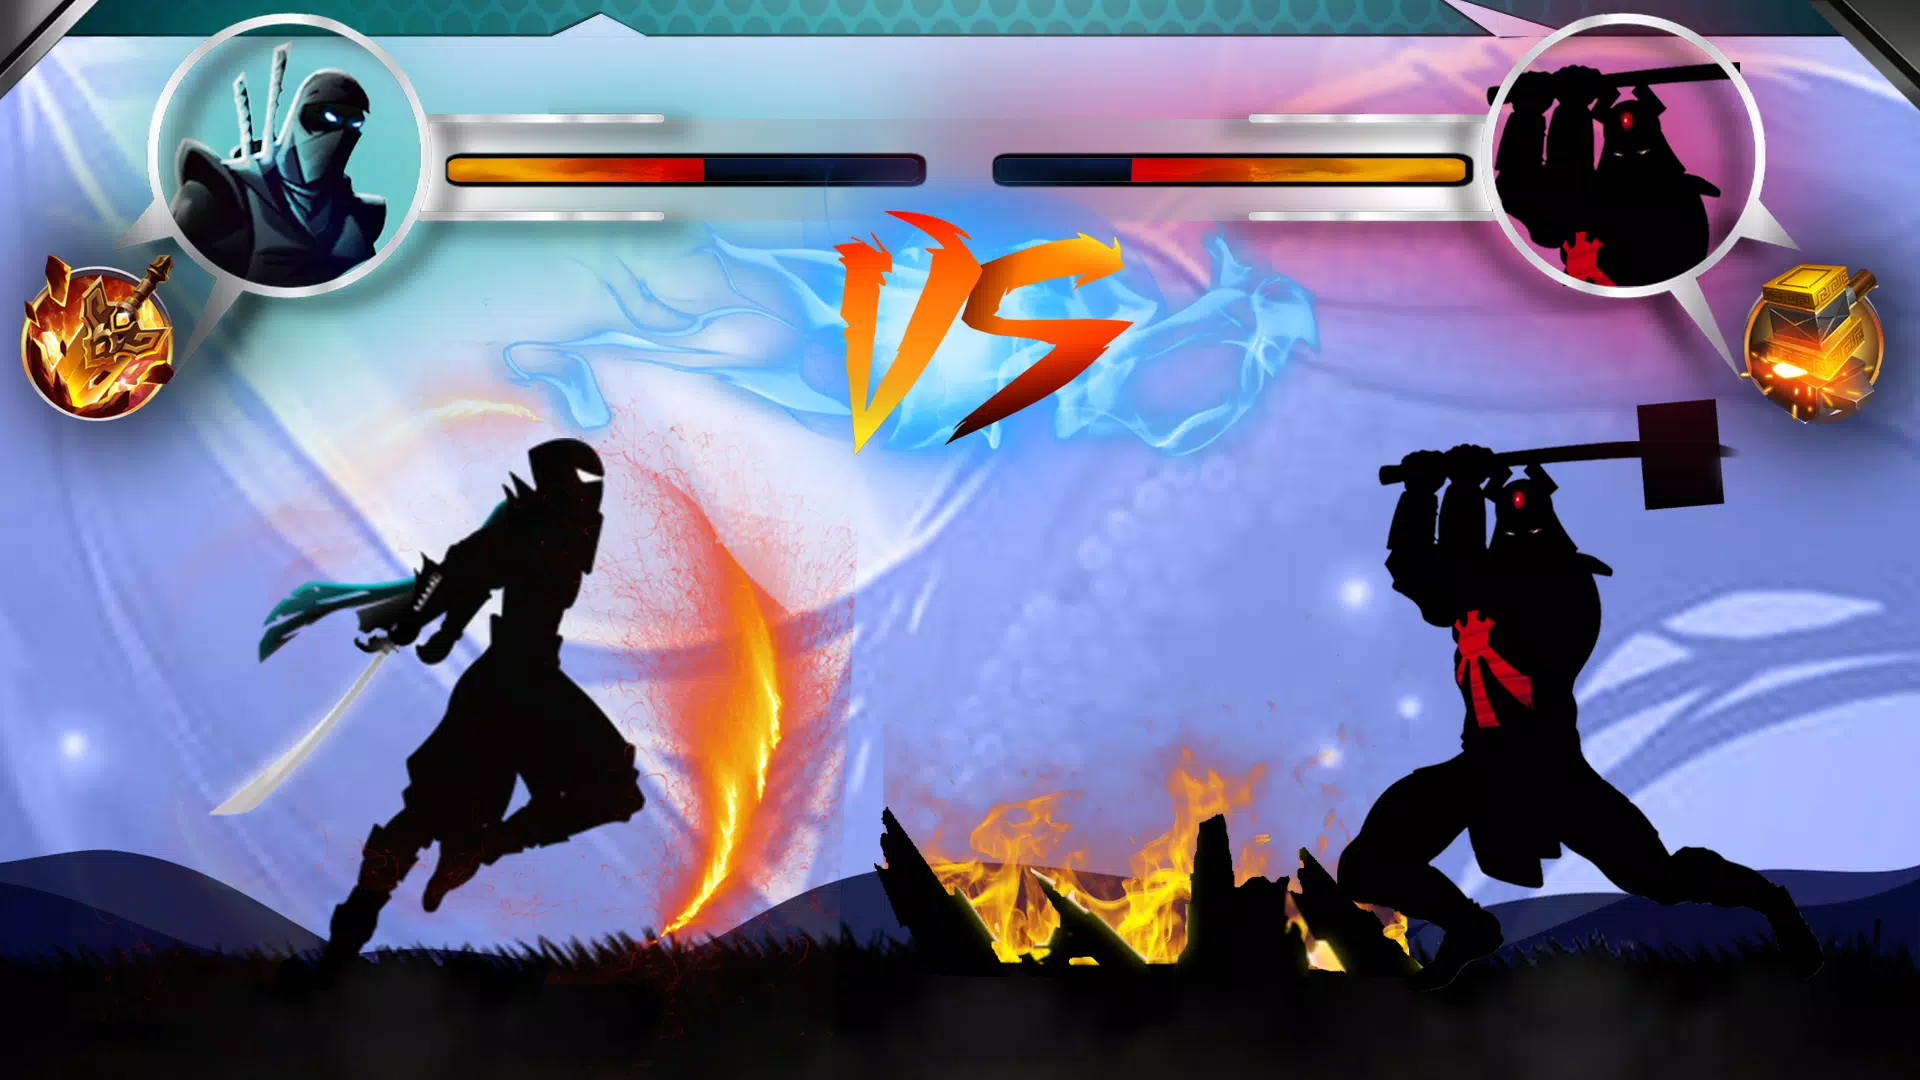 Get Ninja Shadow Fight 2 - Microsoft Store